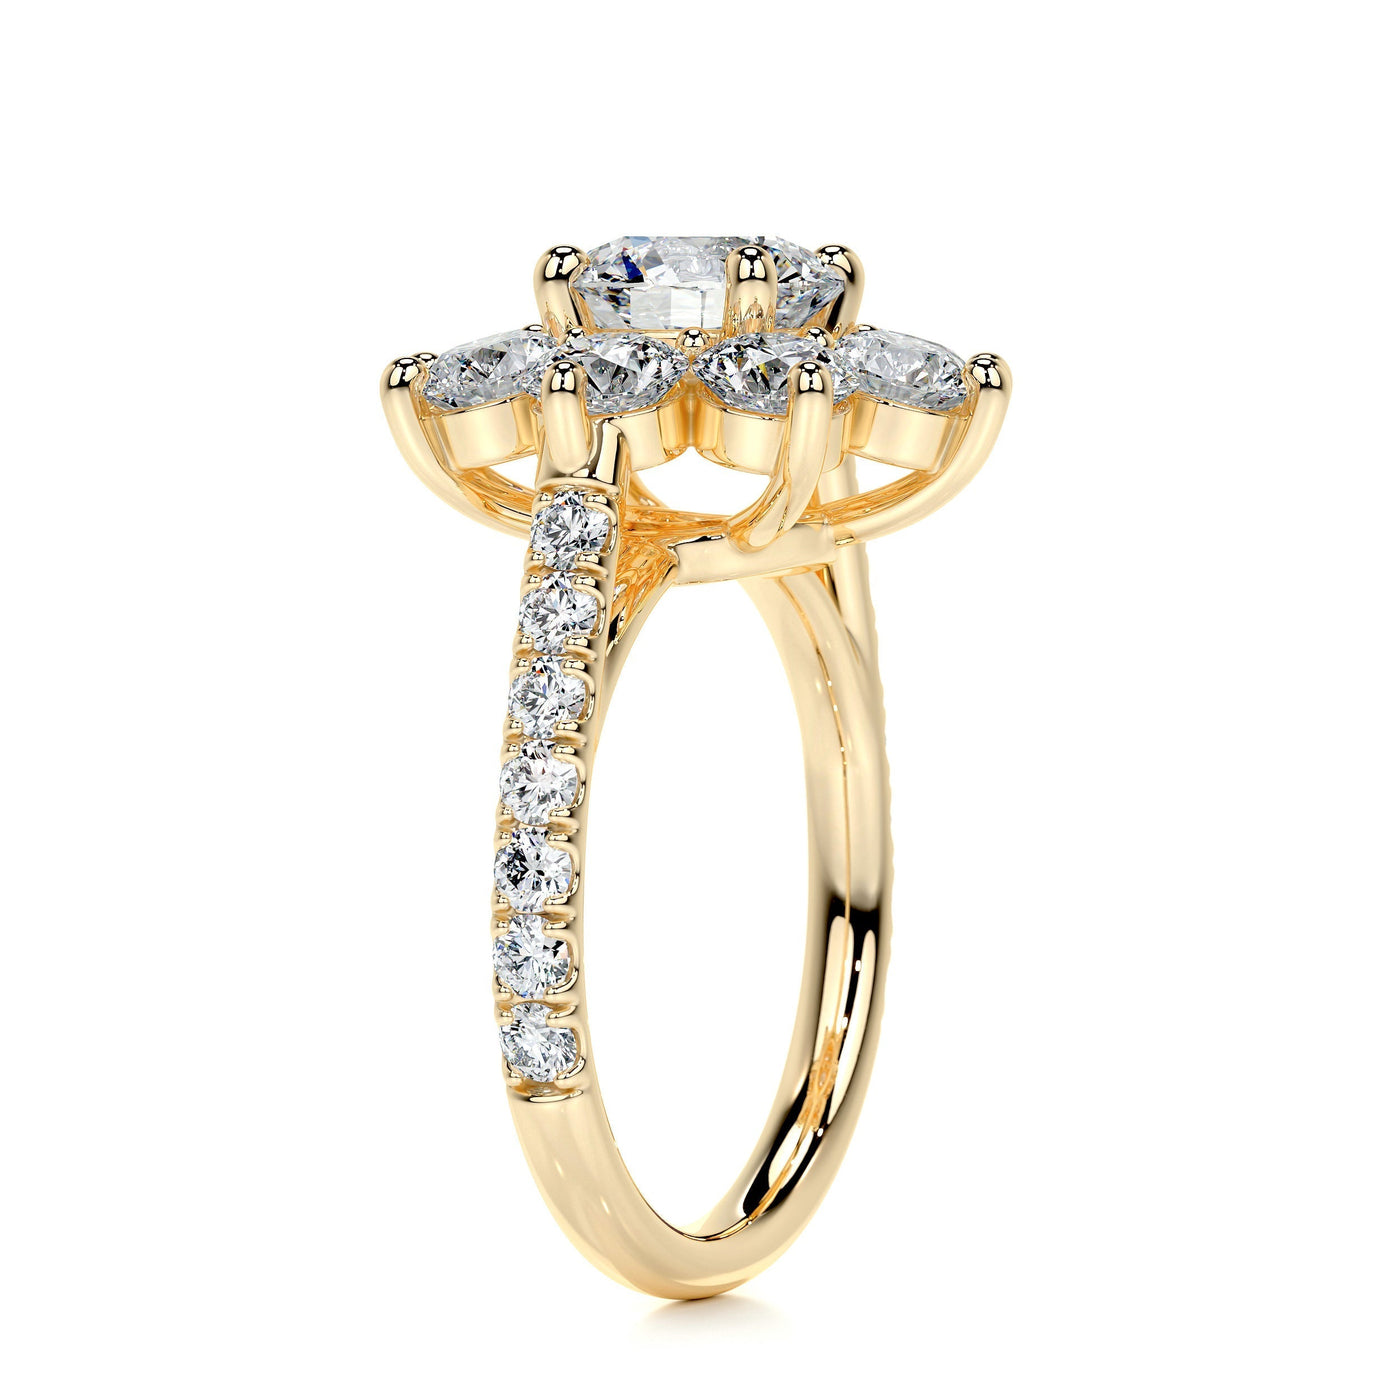 1.0 Carat Round Cut Flower Style Halo Moissanite Engagement Ring